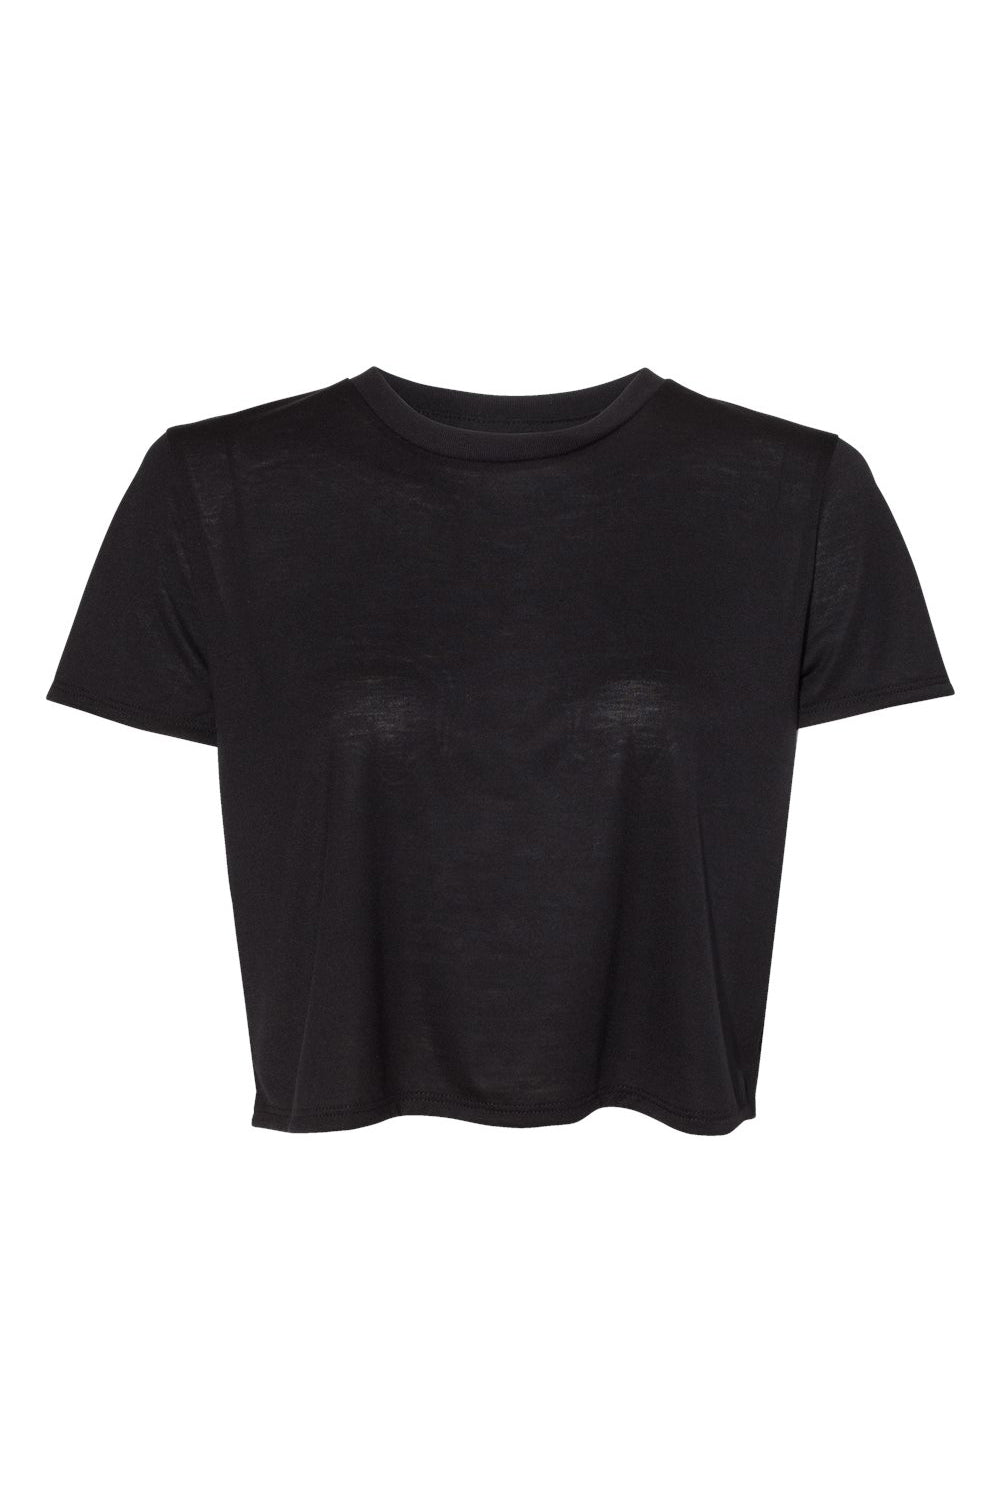 Bella + Canvas B8882/8882 Womens Flowy Cropped Short Sleeve Crewneck T-Shirt Black Flat Front